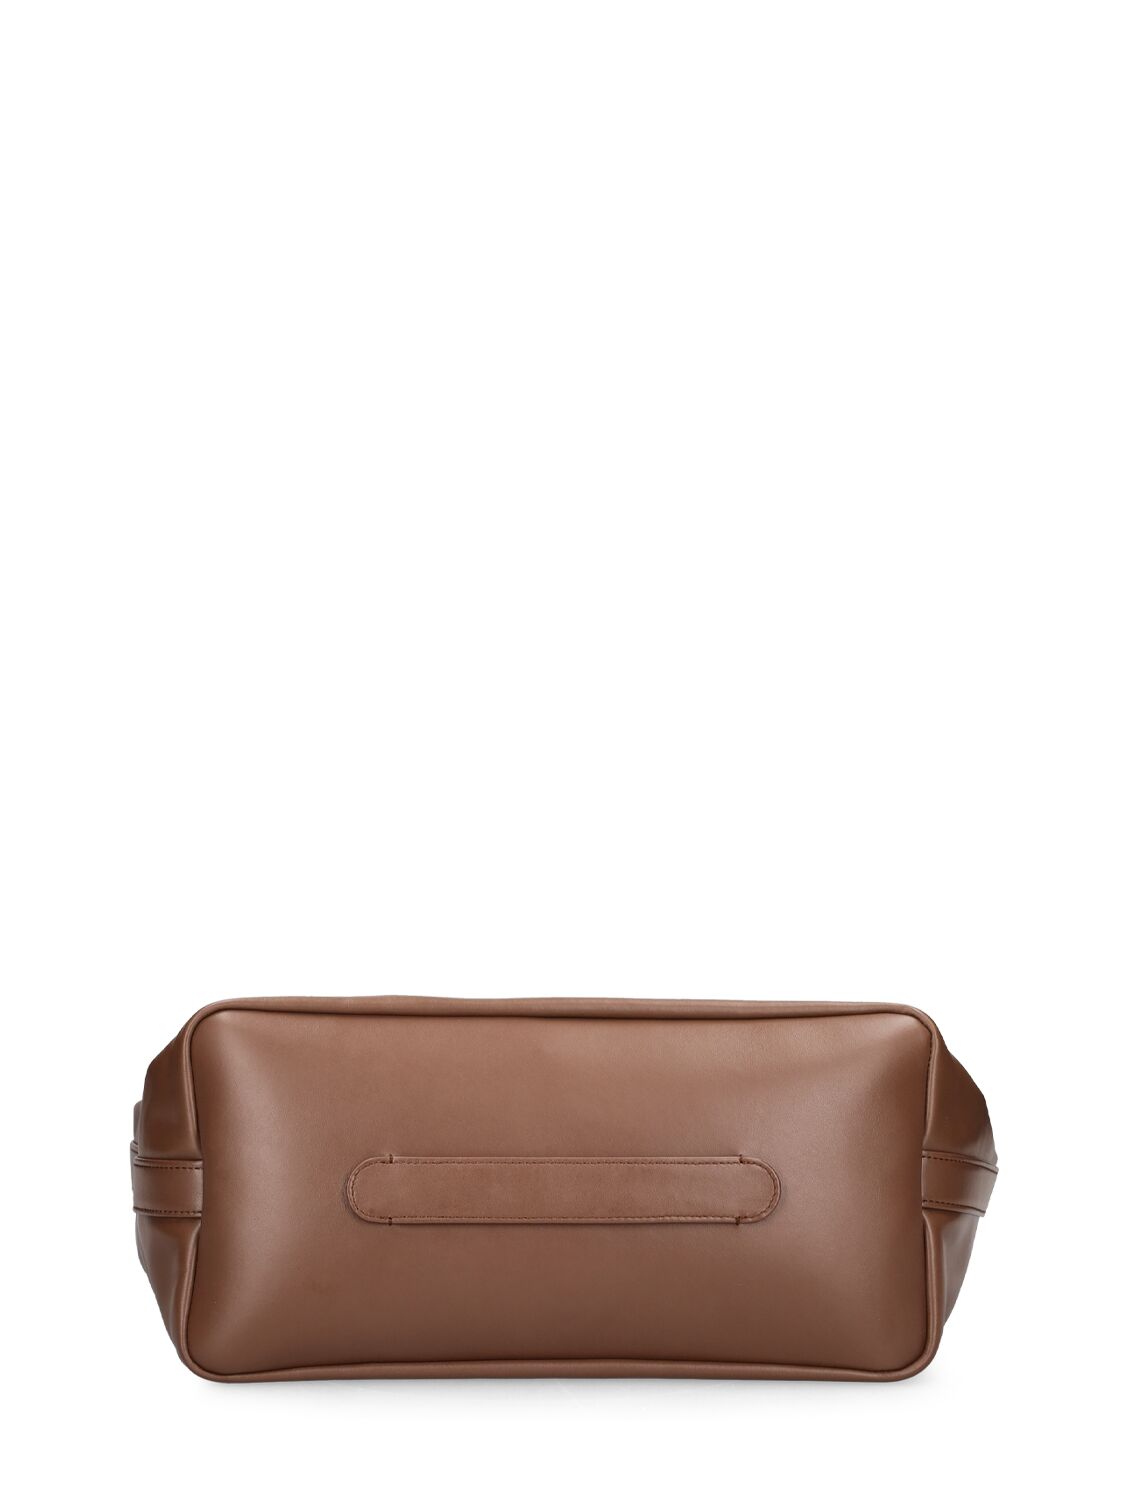 Shop Loulou Studio Mila Leather Hobo Bag In Brown